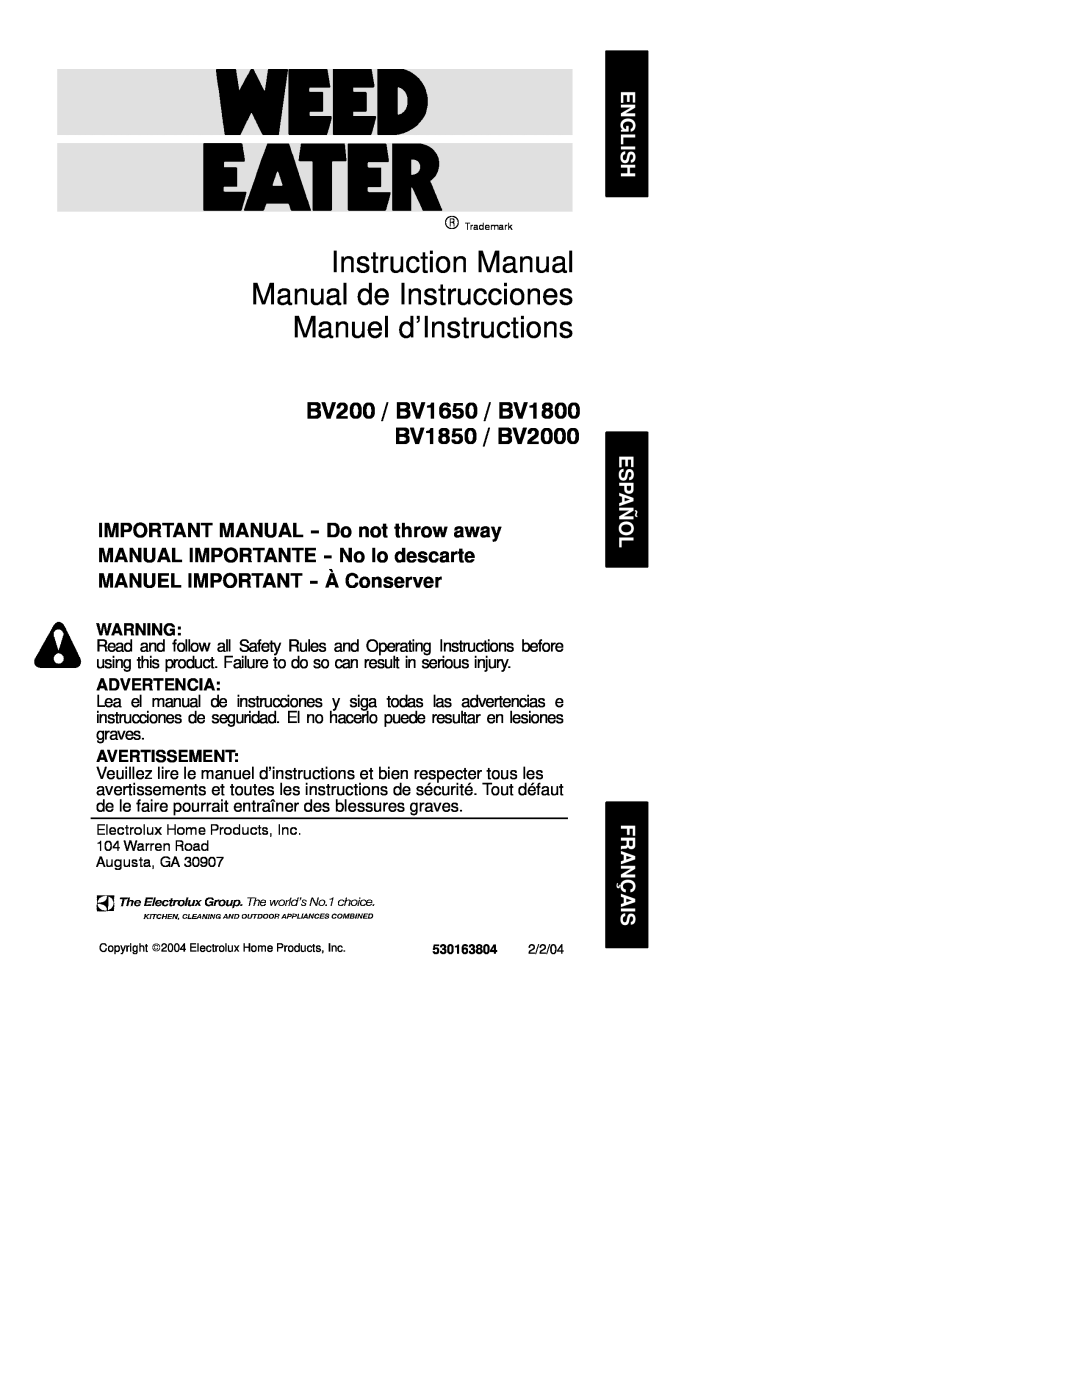 Weed Eater 530163804 instruction manual Manuel d’Instructions, BV200 / BV1650 / BV1800 BV1850 / BV2000, Advertencia 